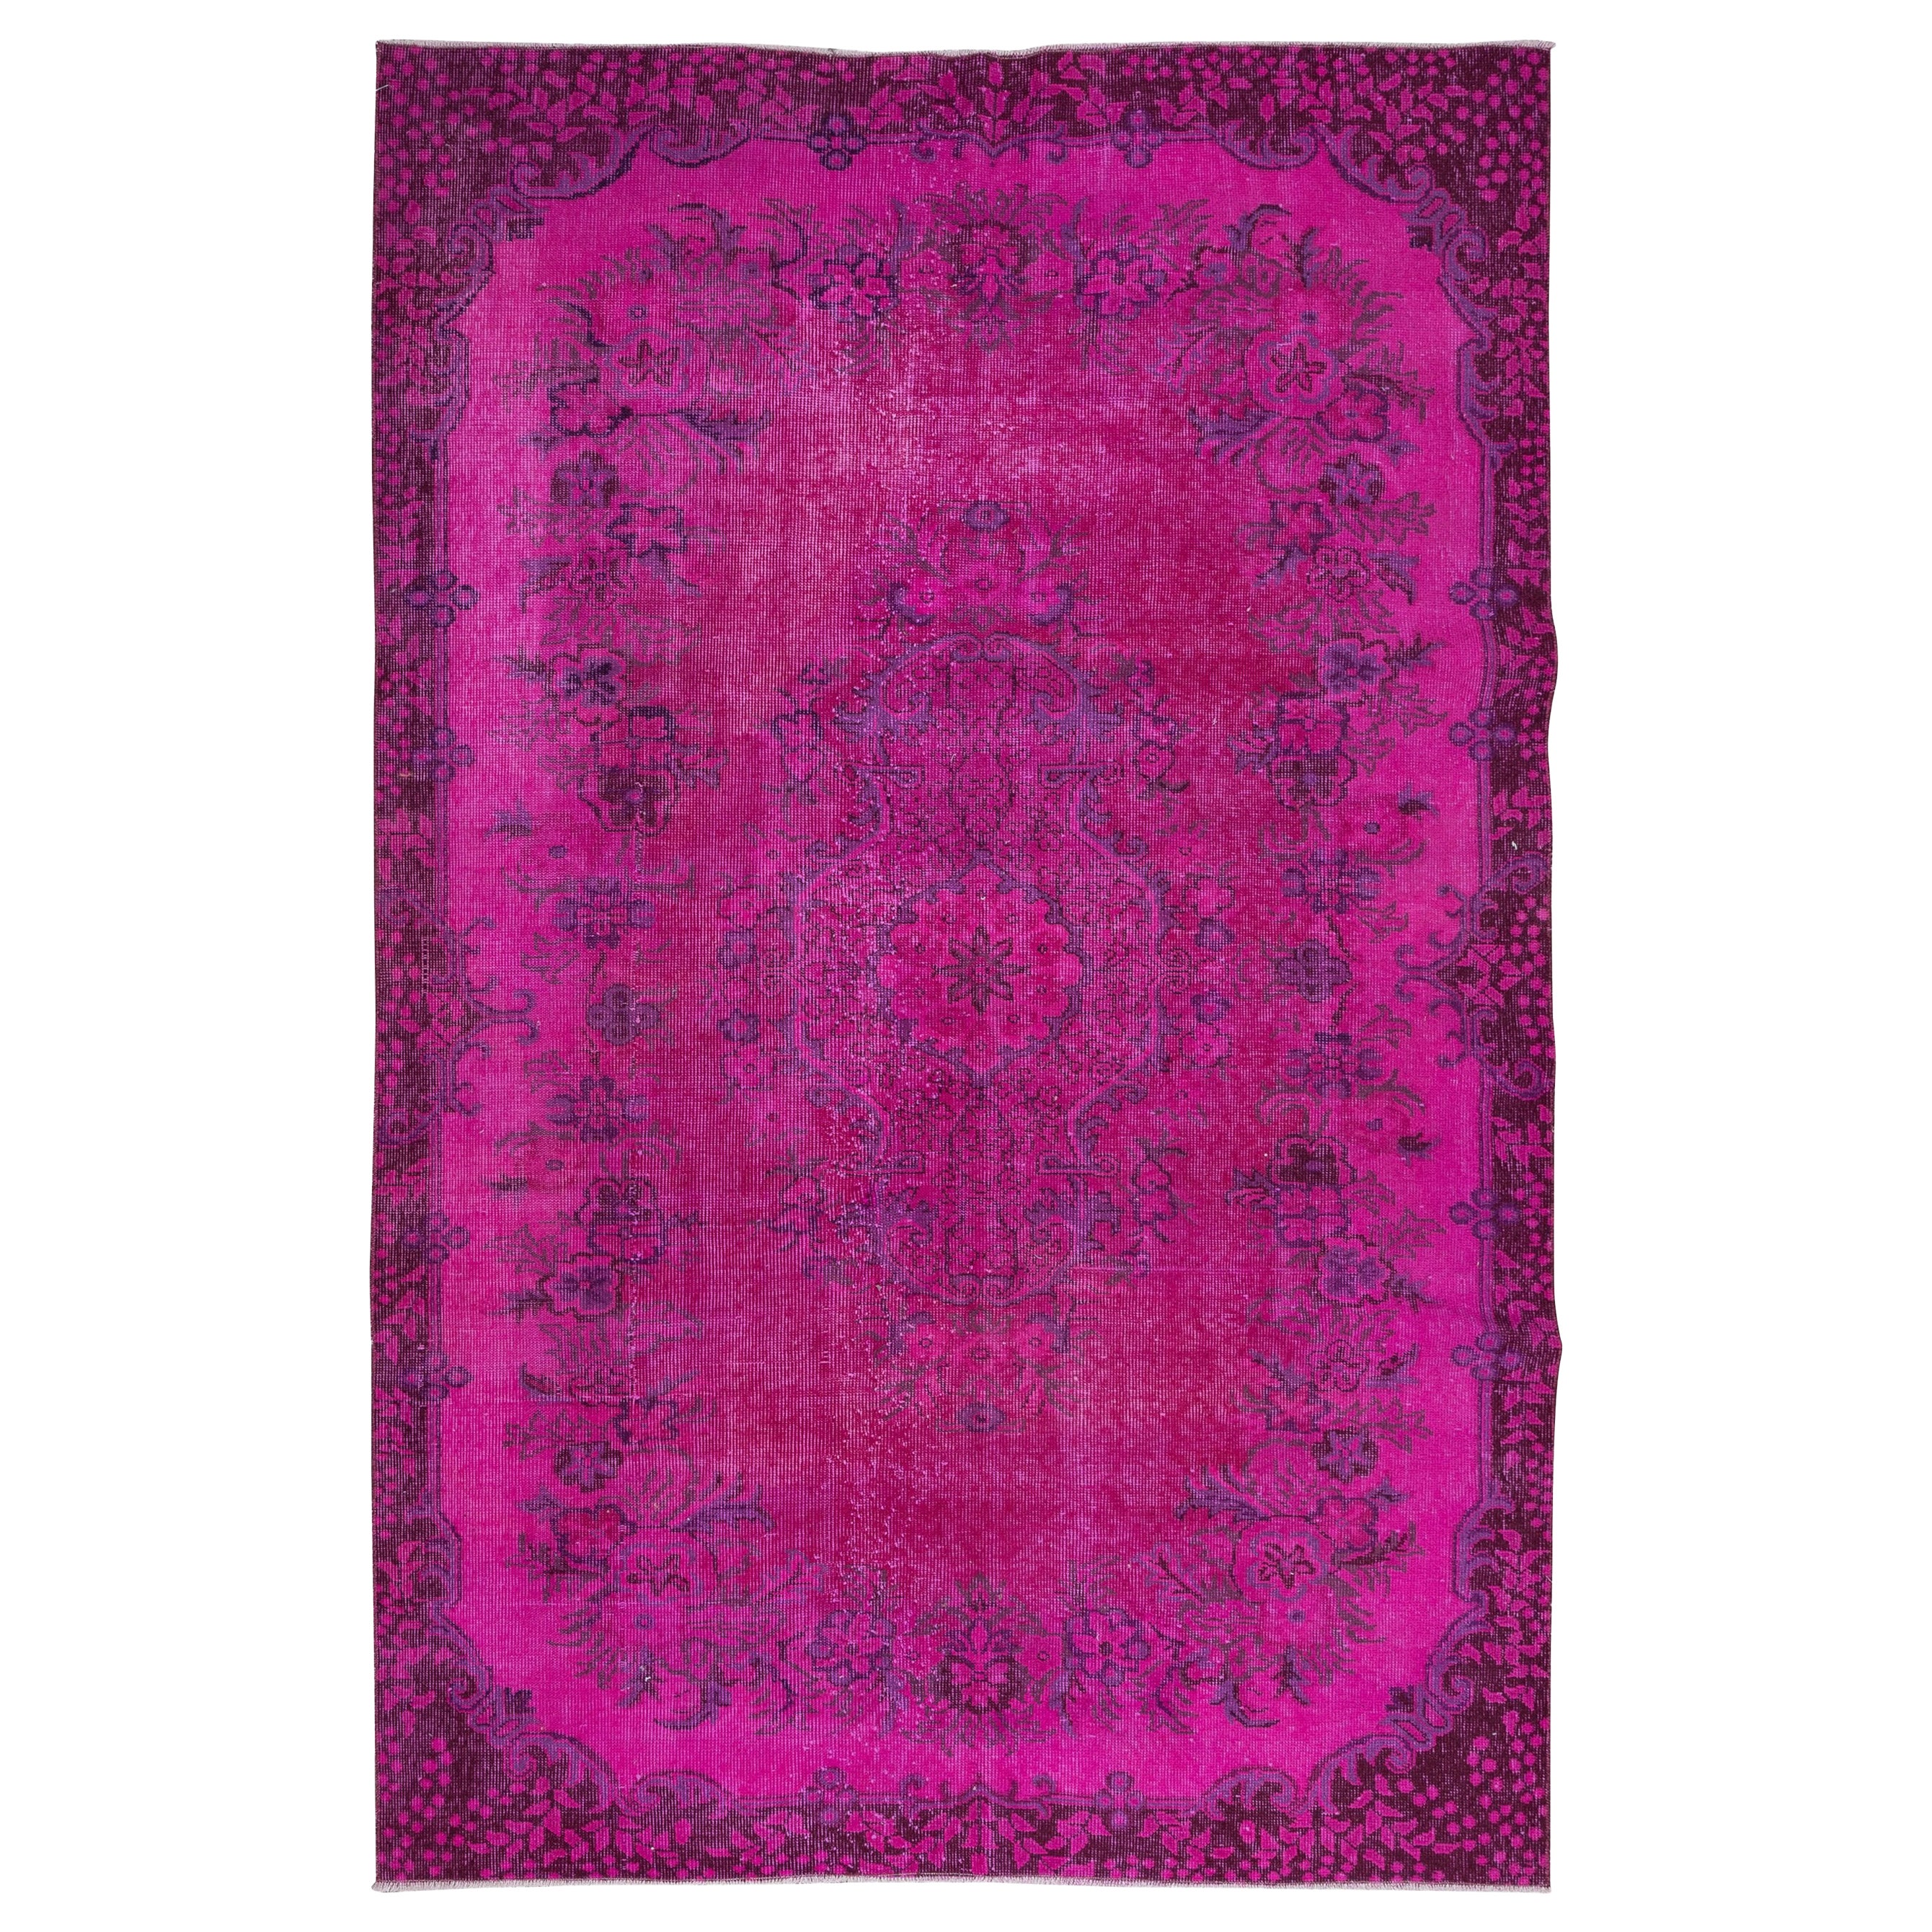 5.6x8.6 Ft Hot Pink Modern Turkish Area Rug, Floral Pattern Handmade Carpet